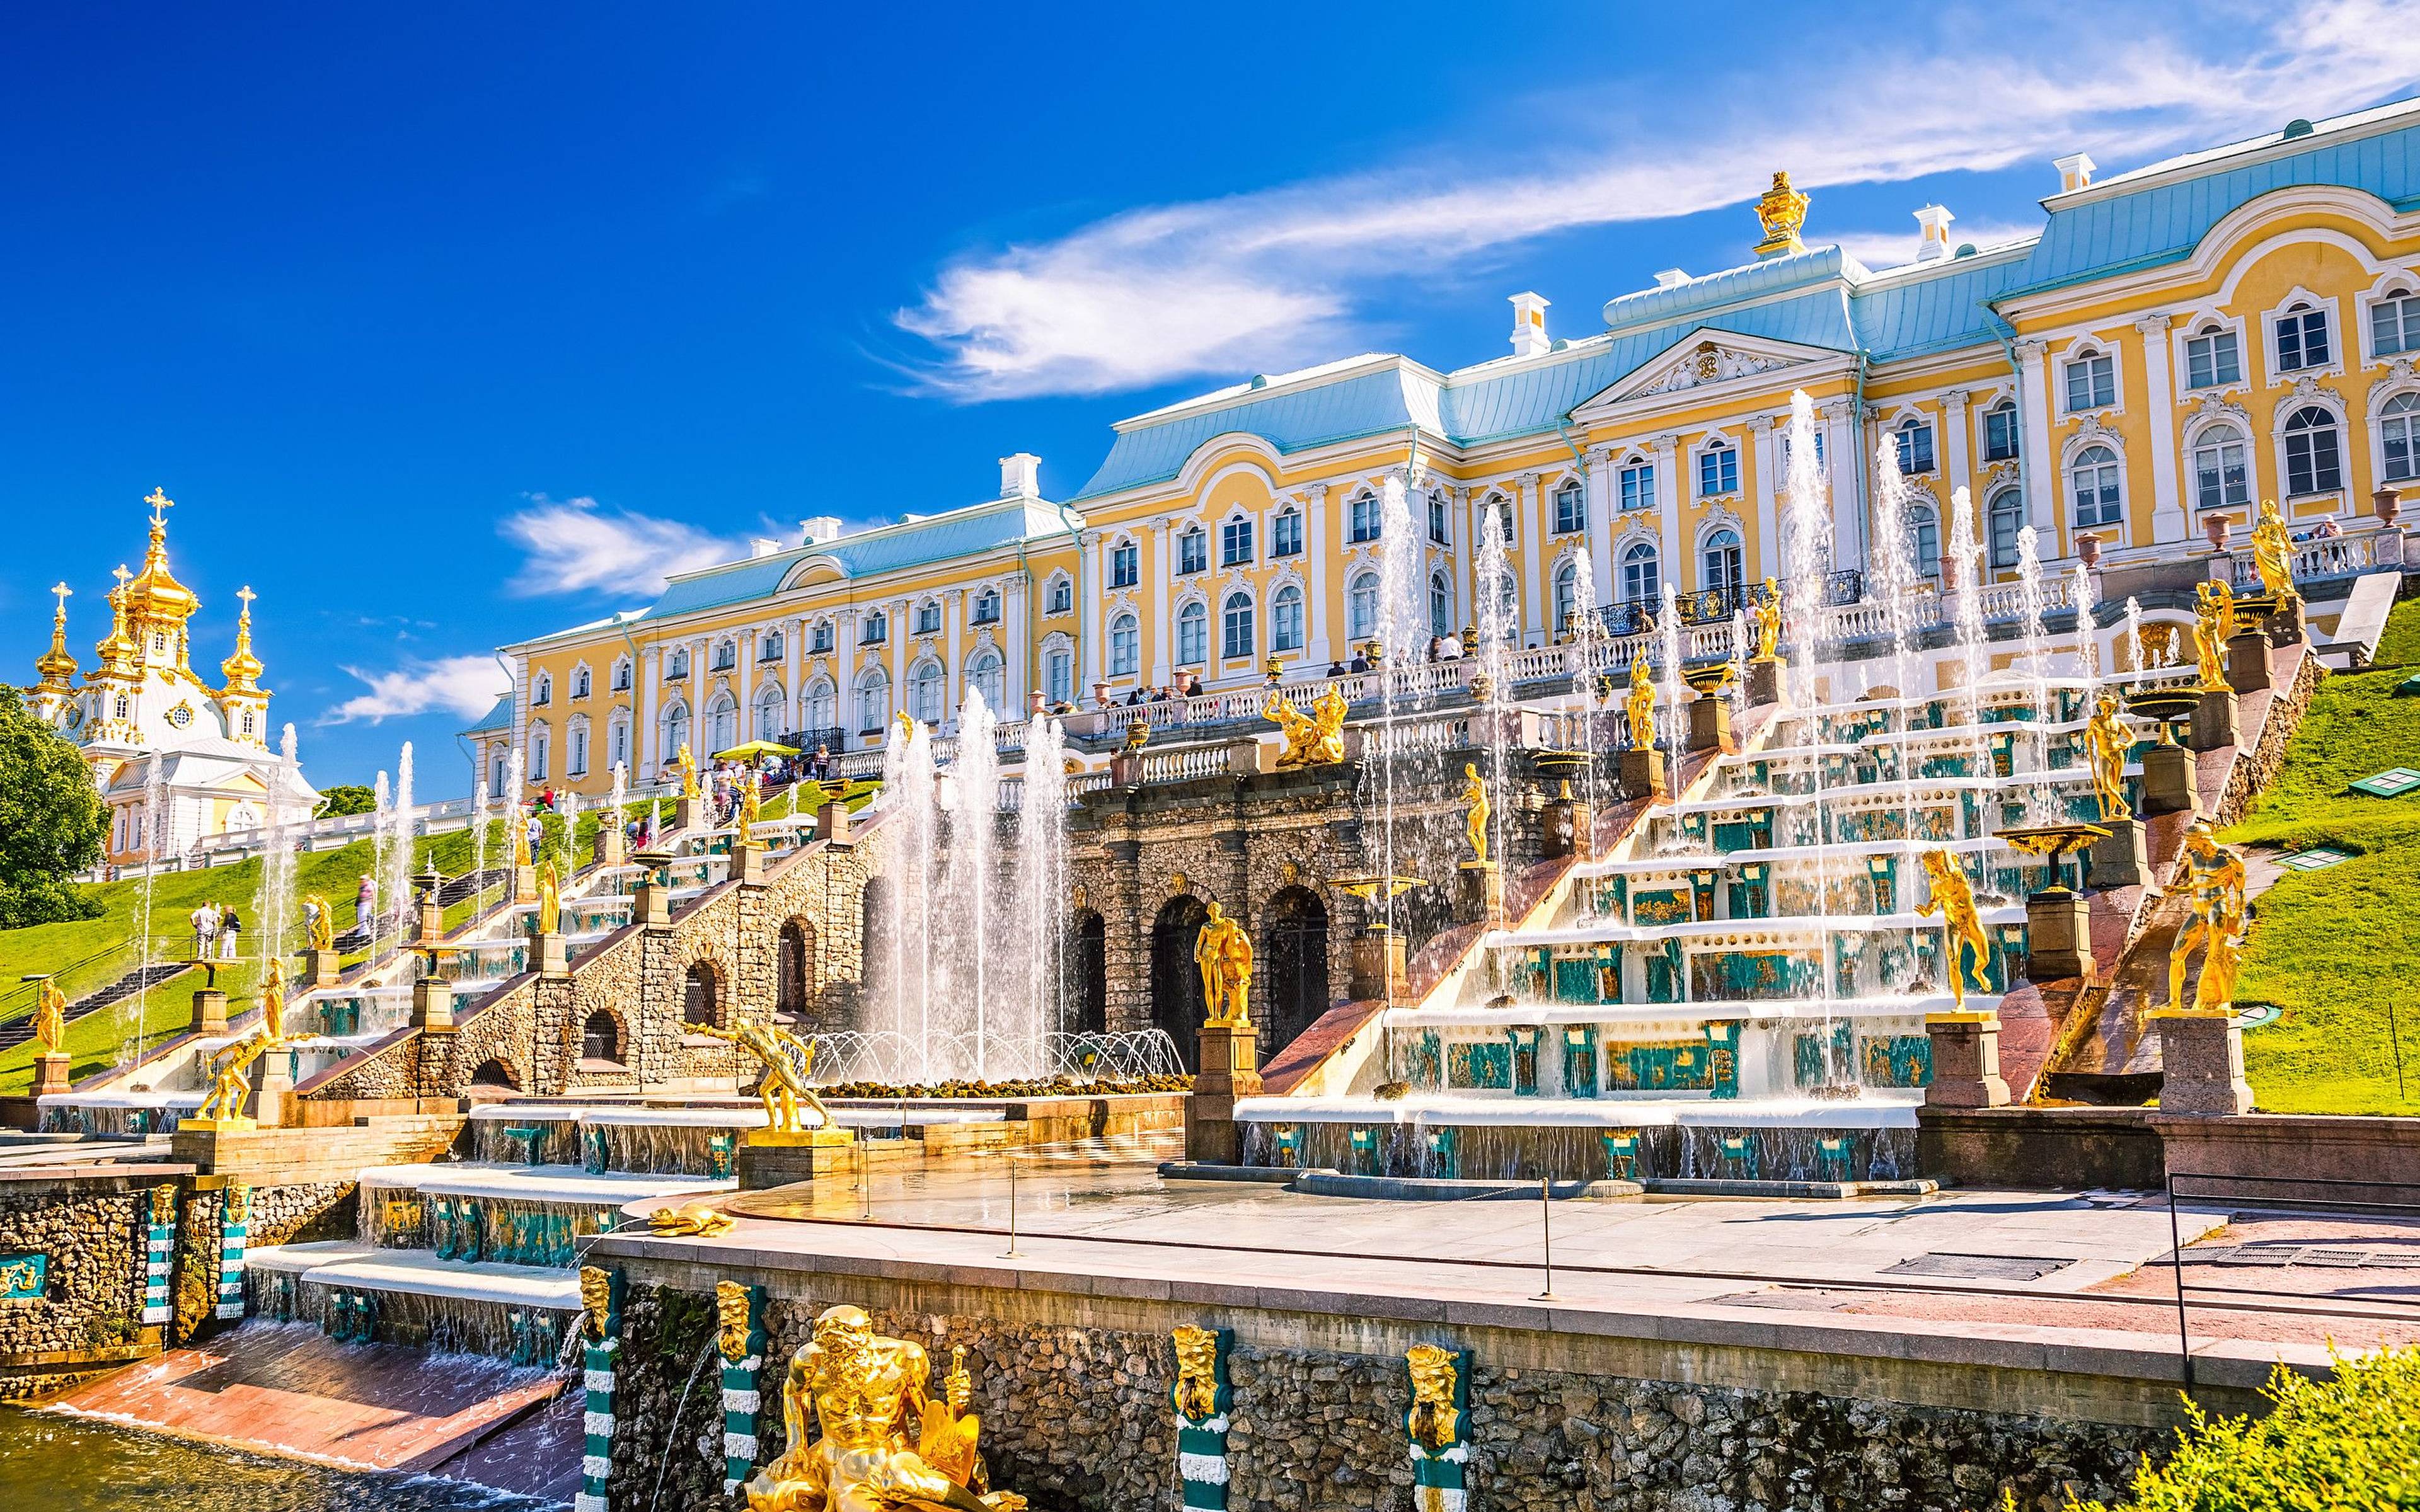 Visita della reggia imperiale marittima russa Peterhof : la Versailles russa